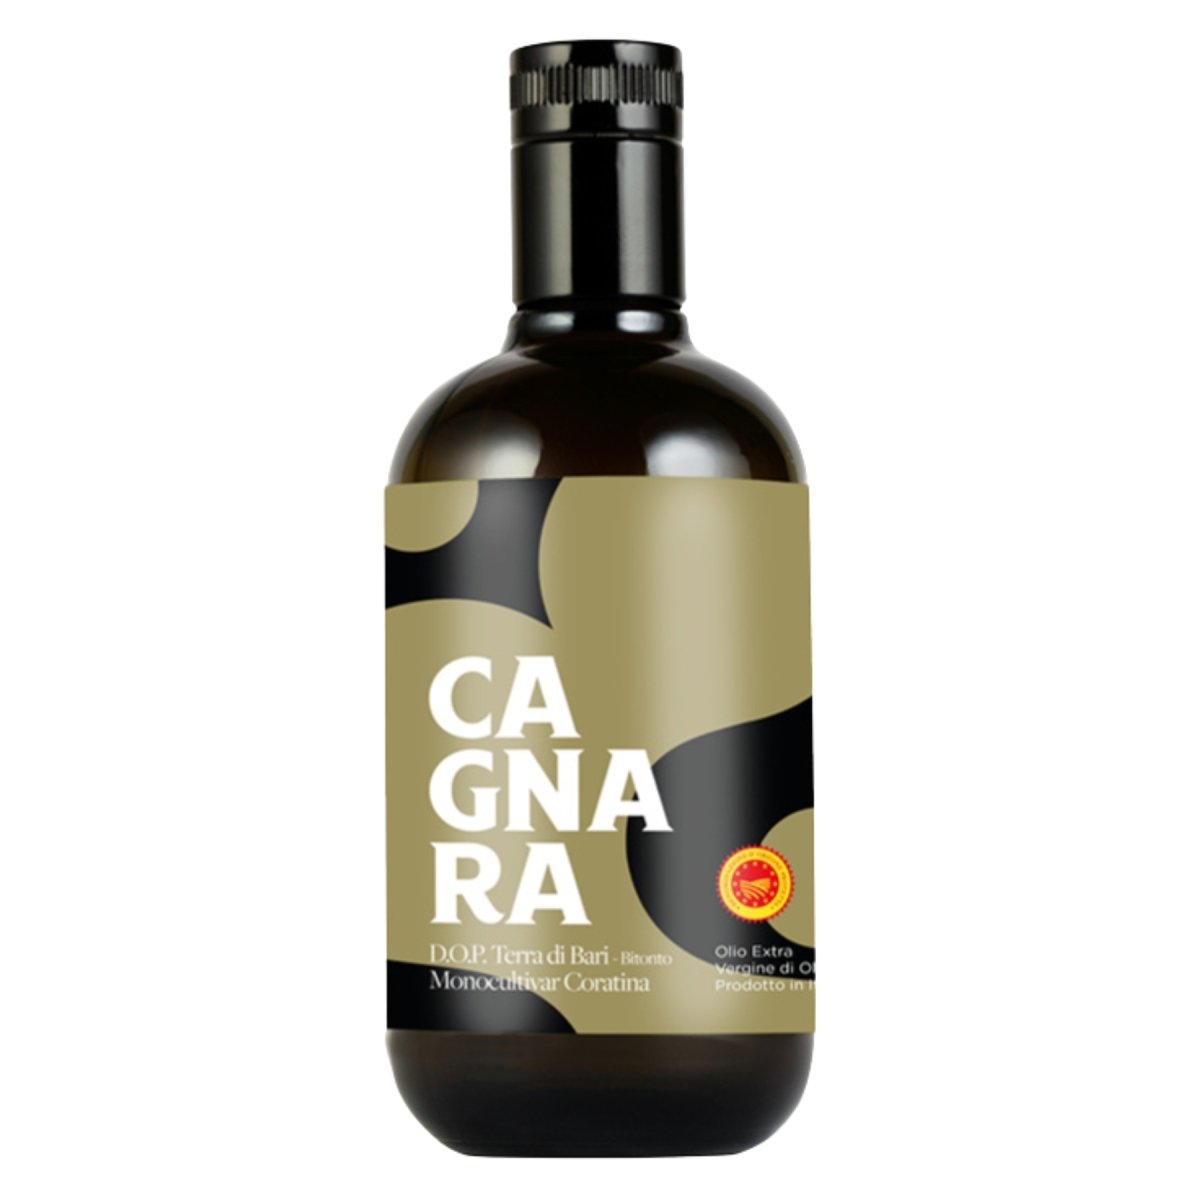 oliwa z oliwek extra virgin - Cagnara DOP - Ciccolella - Slow Italy